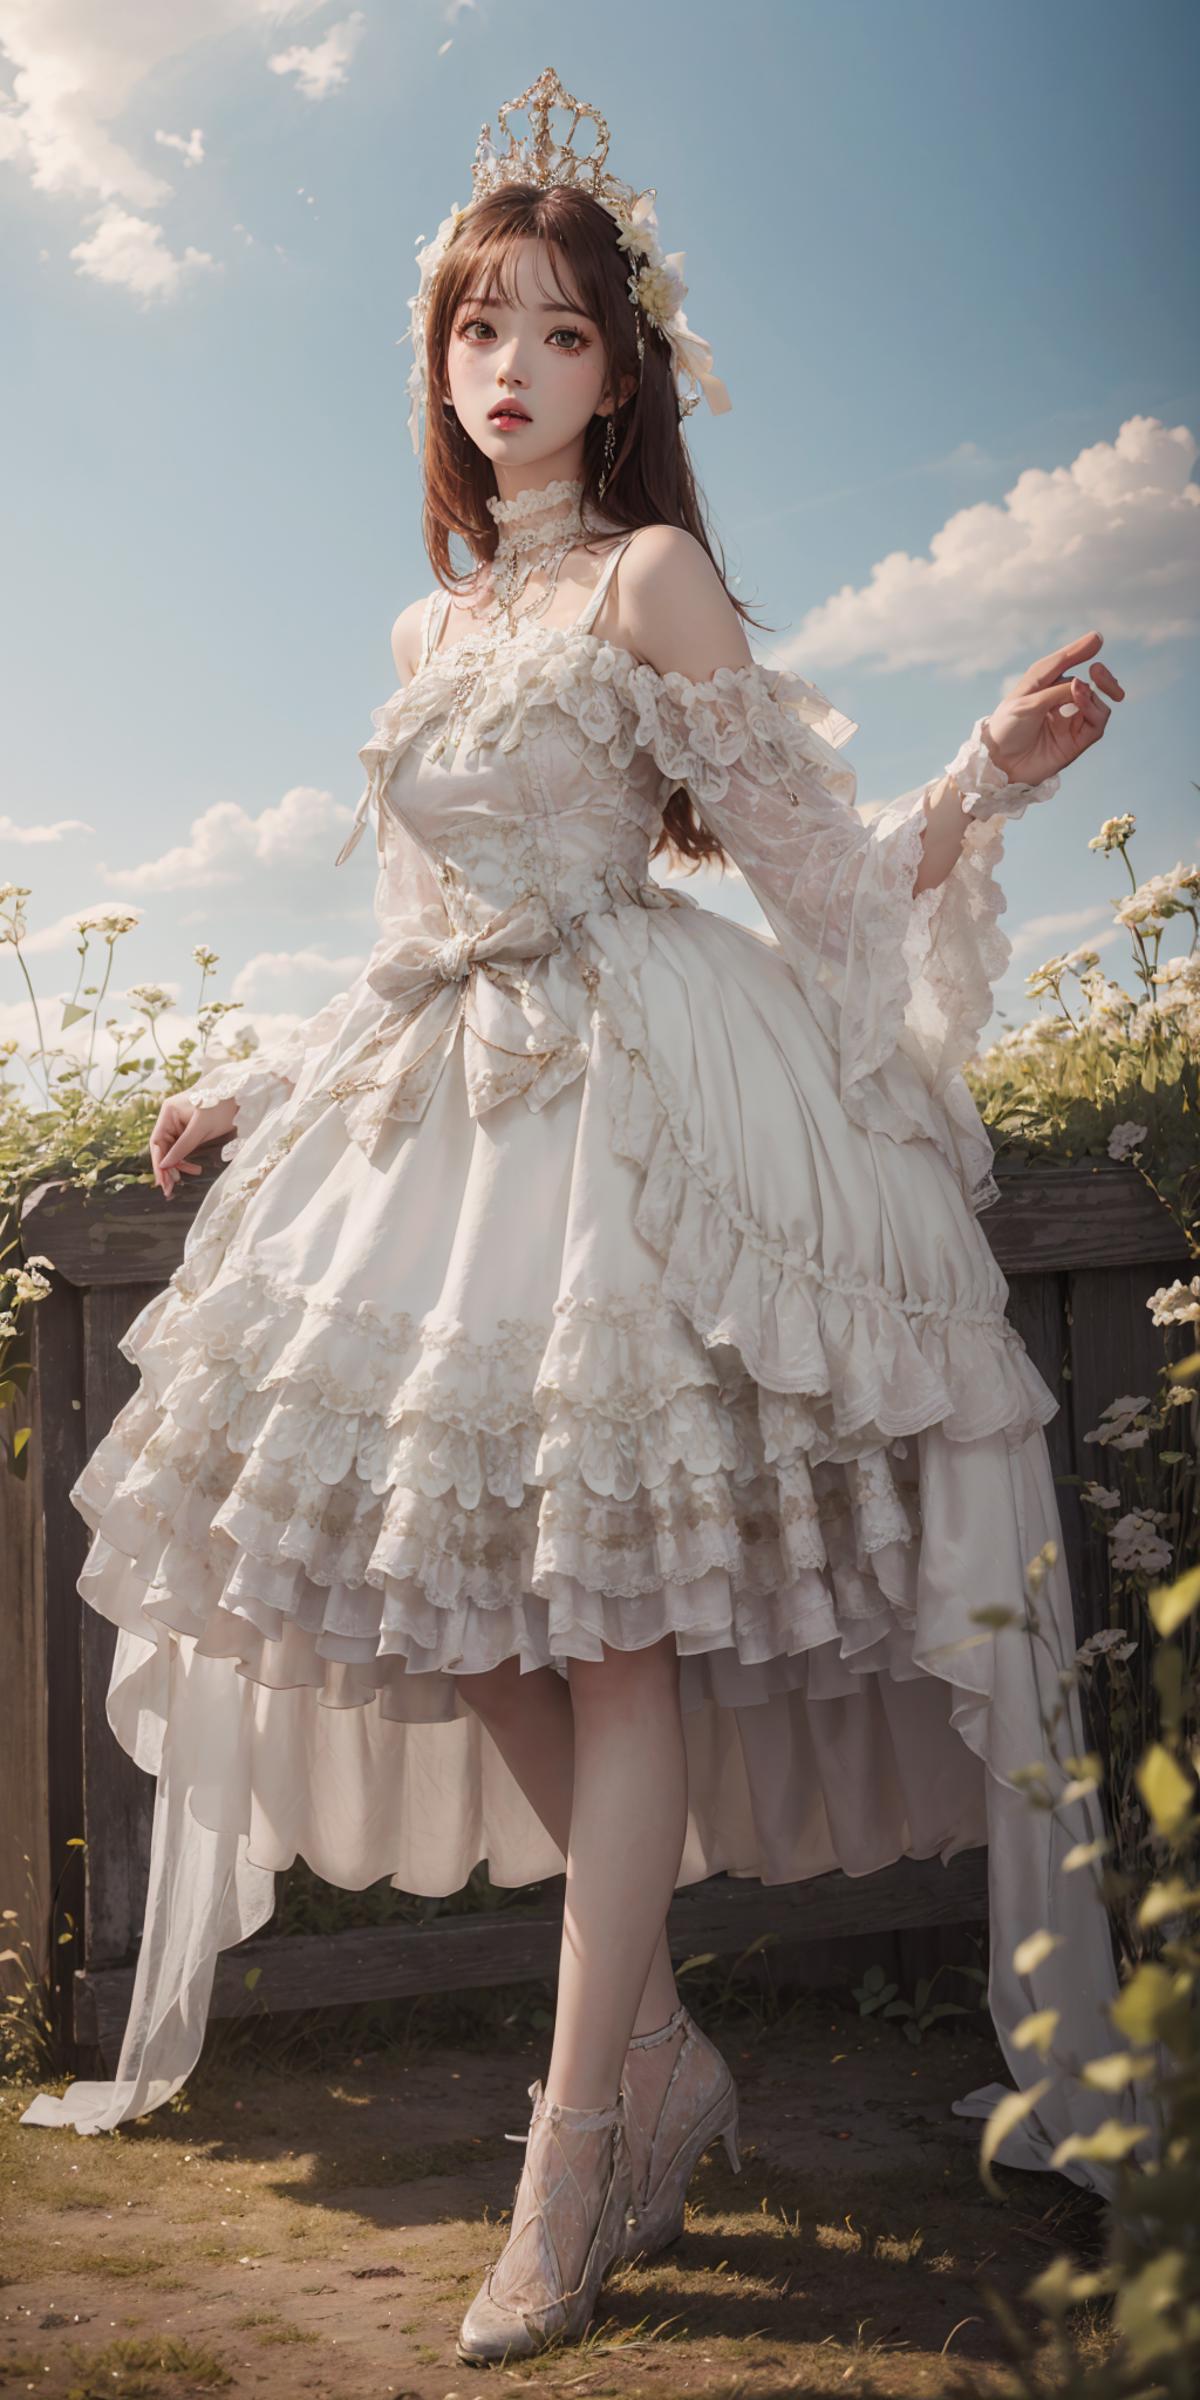 【白月如霜】Dress No.1 White dress image by Manaka_nemu_offline